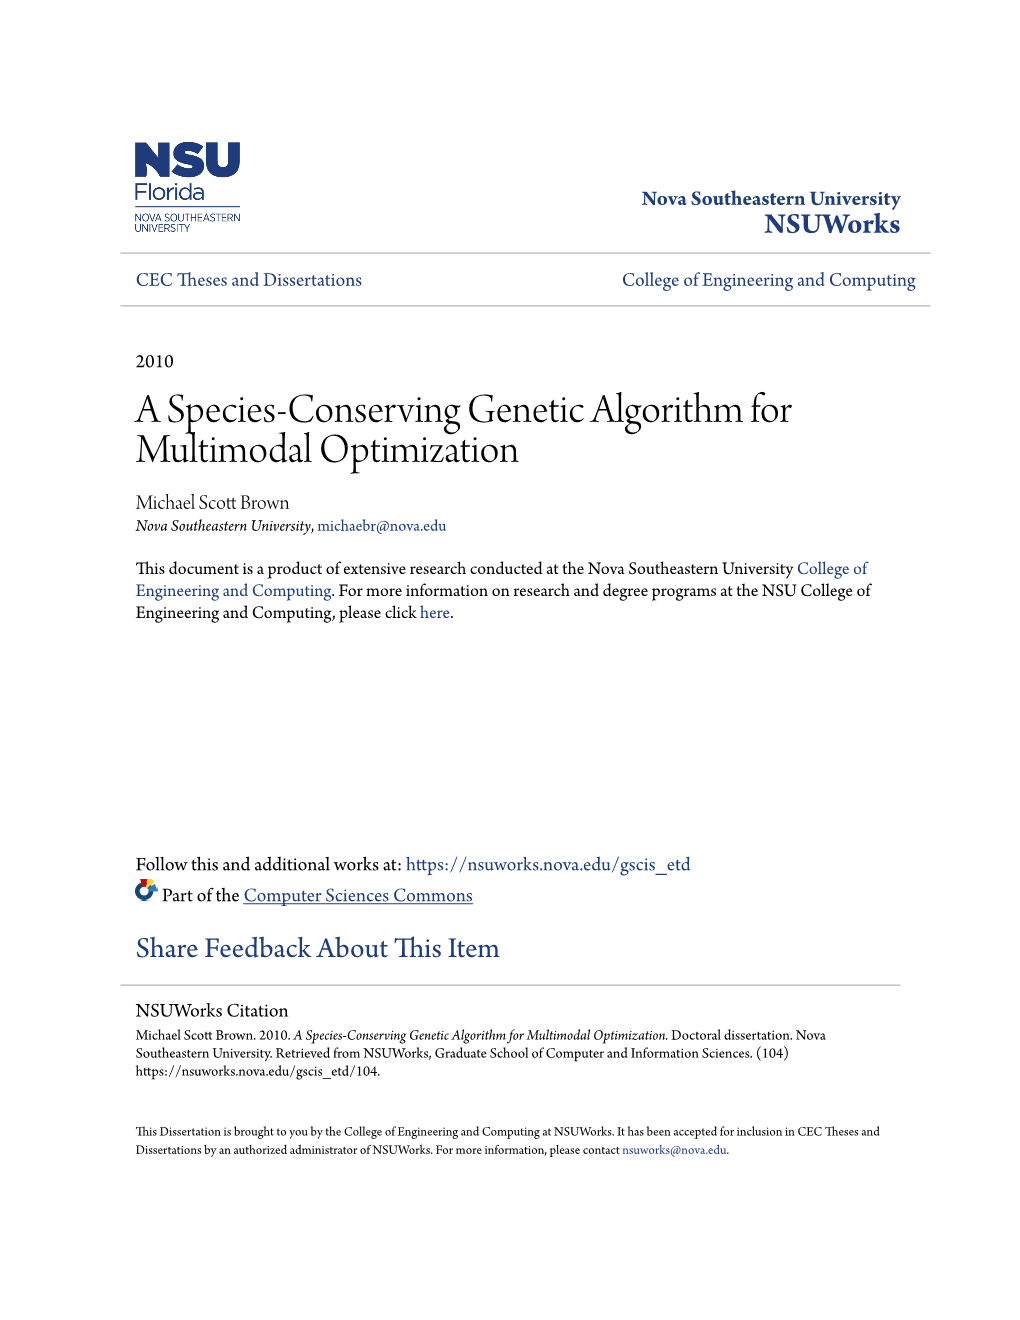 A Species-Conserving Genetic Algorithm for Multimodal Optimization Michael Scott Rb Own Nova Southeastern University, Michaebr@Nova.Edu